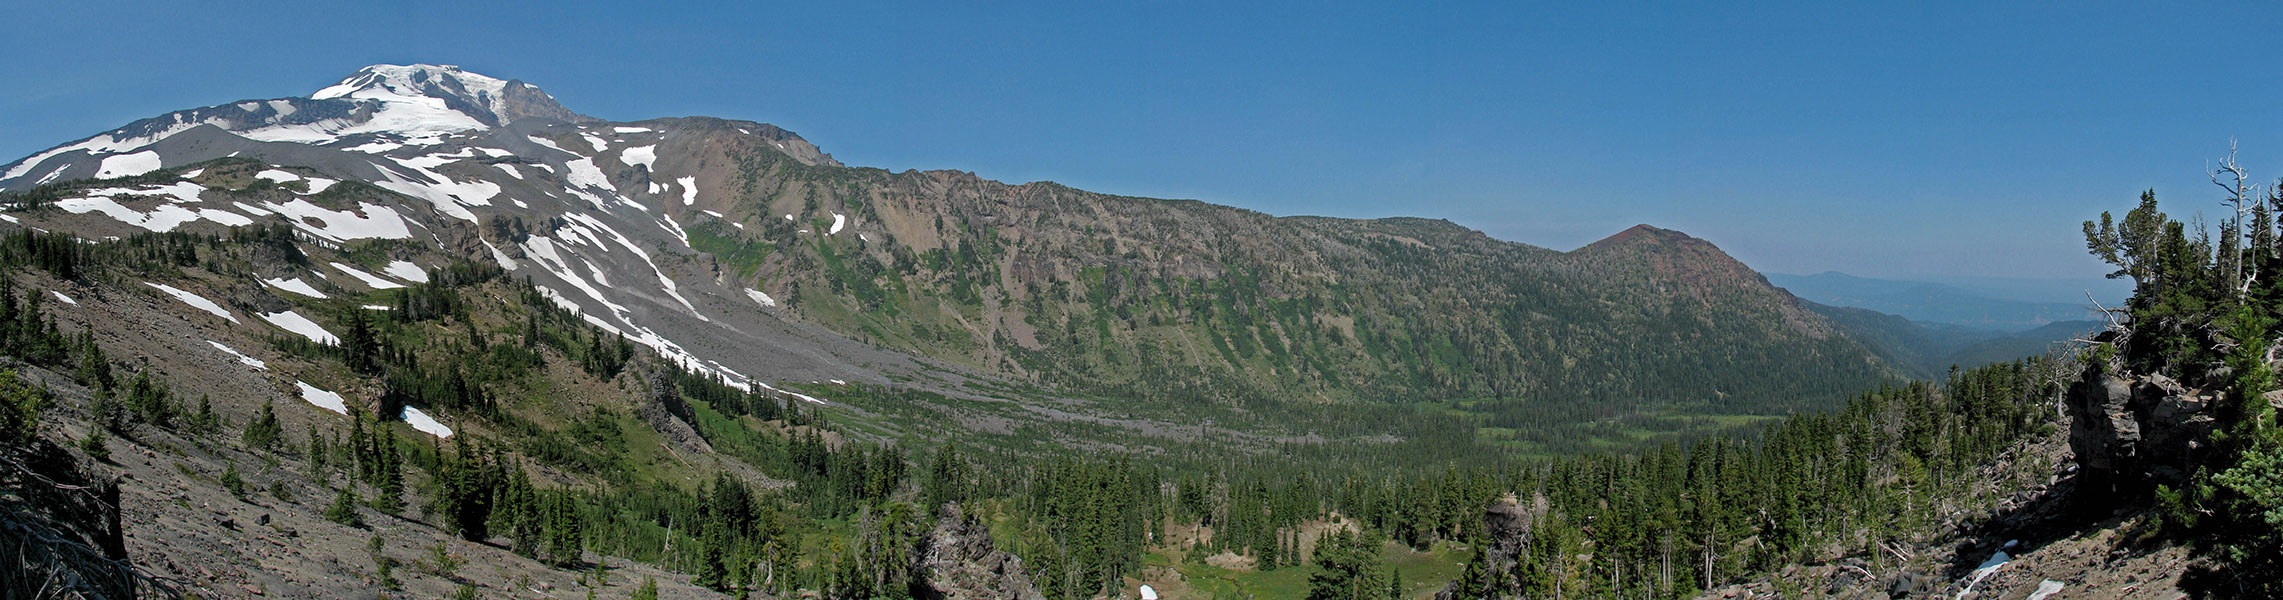 Mount Adams panorama [Hellroaring Viewpoint, Yakama Reservation, Washington]